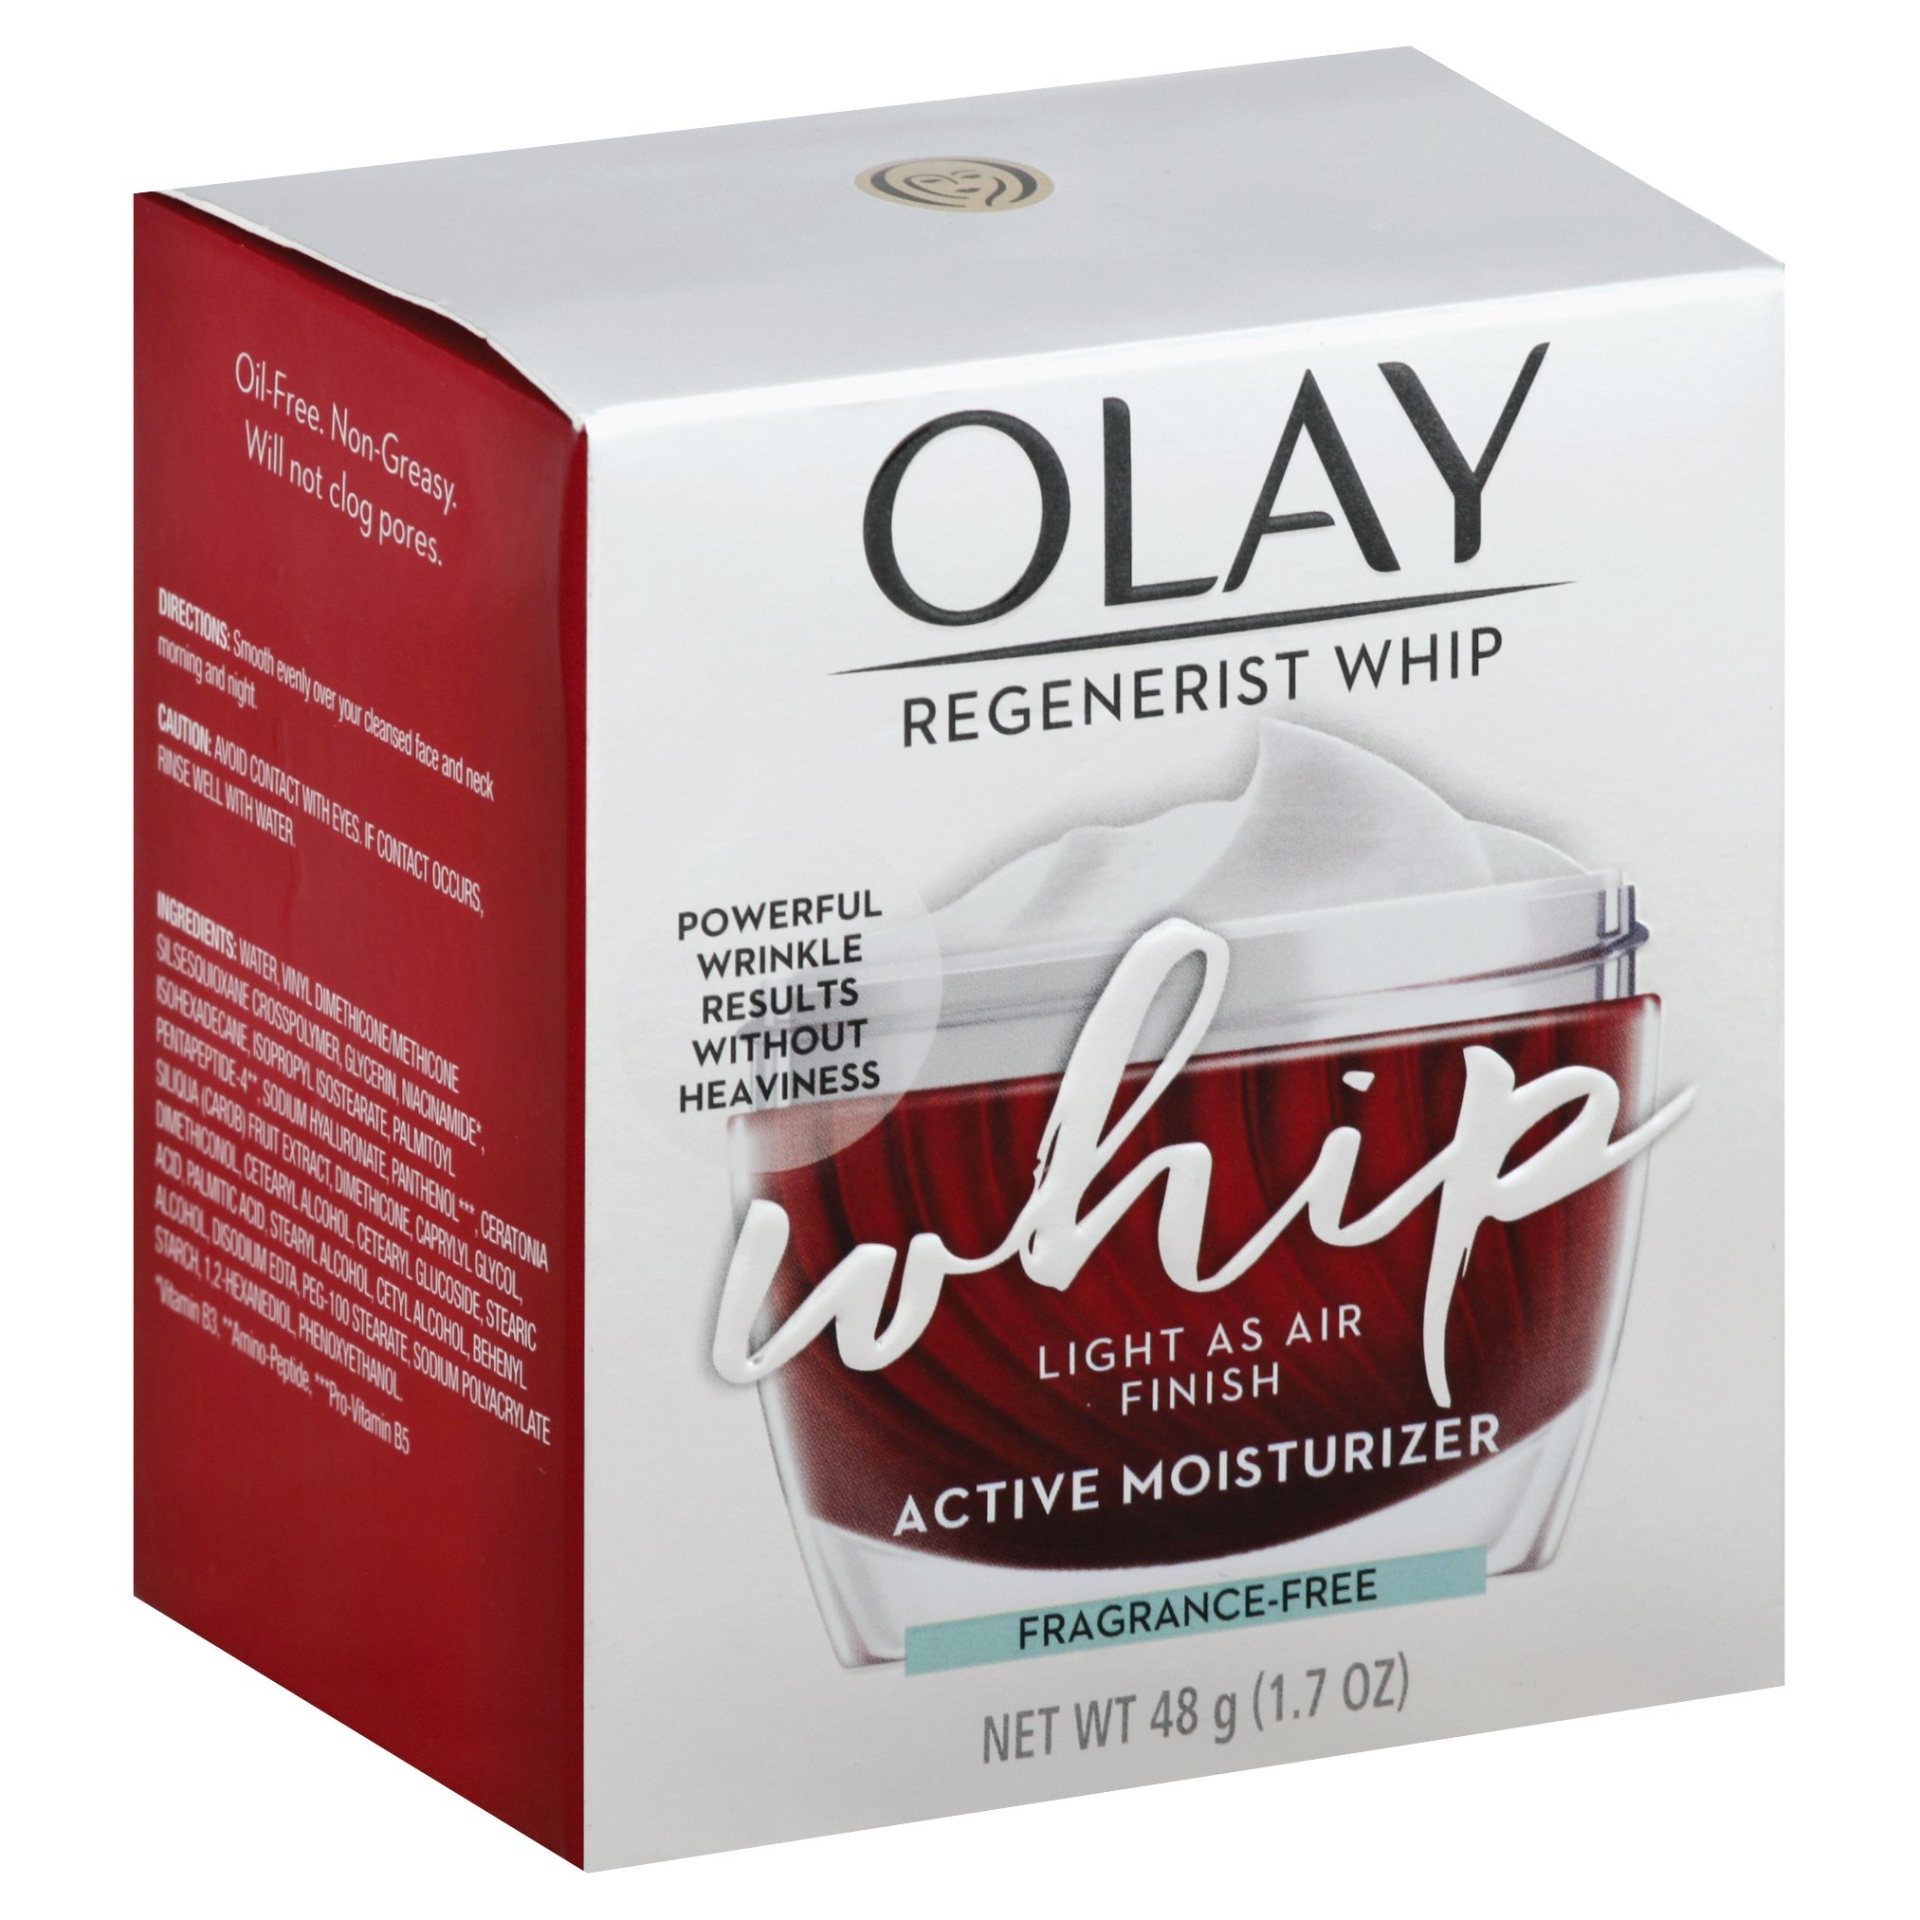 Olay Regenerist Whip Fragrance Free Active Moisturizer 1.7 oz | Shipt